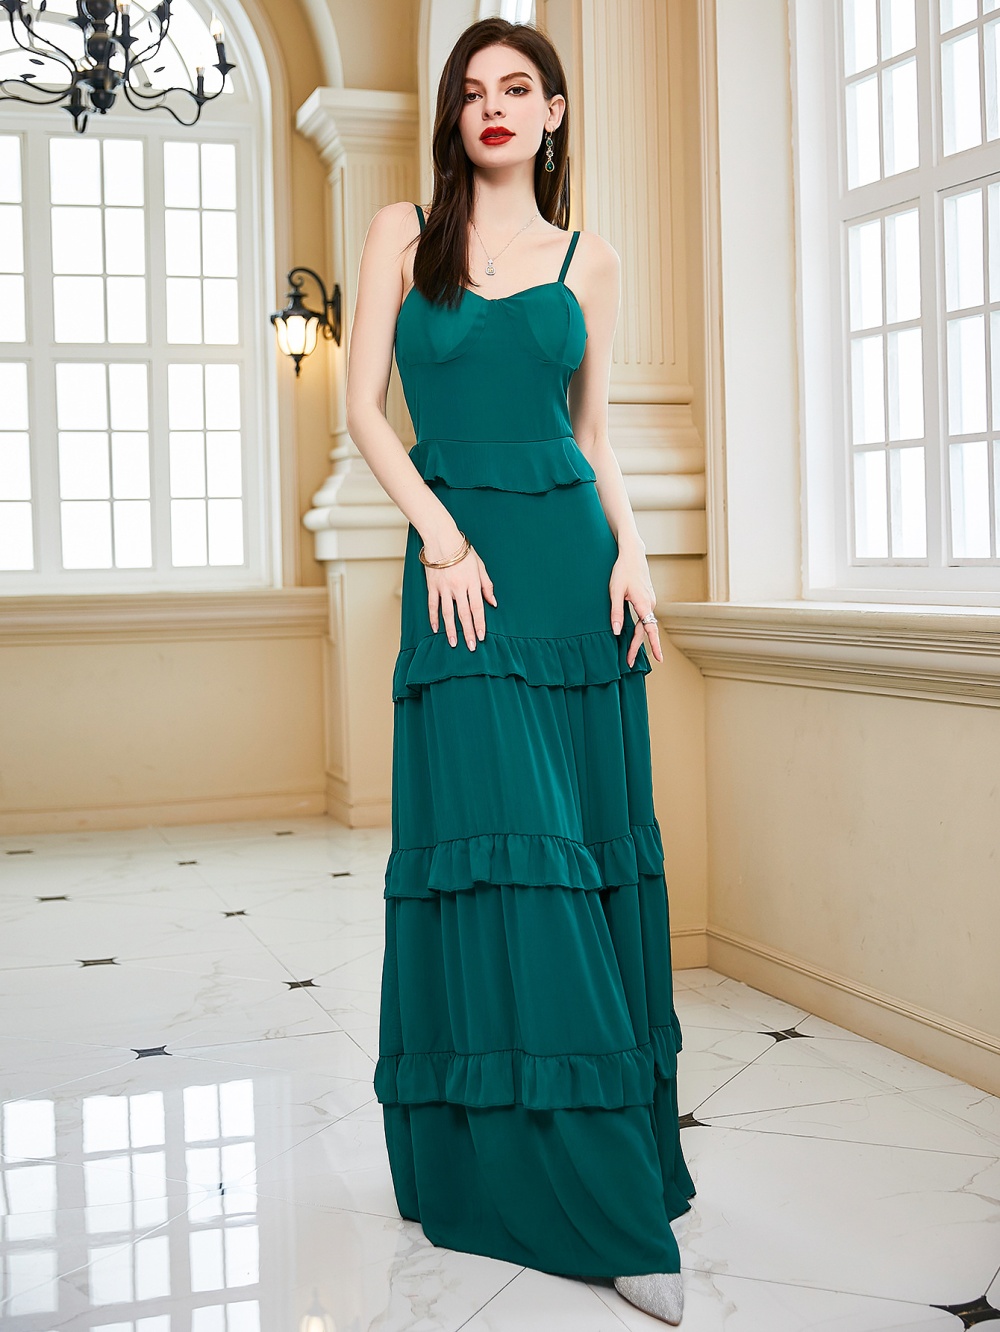 Sexy formal dress European style long dress for women